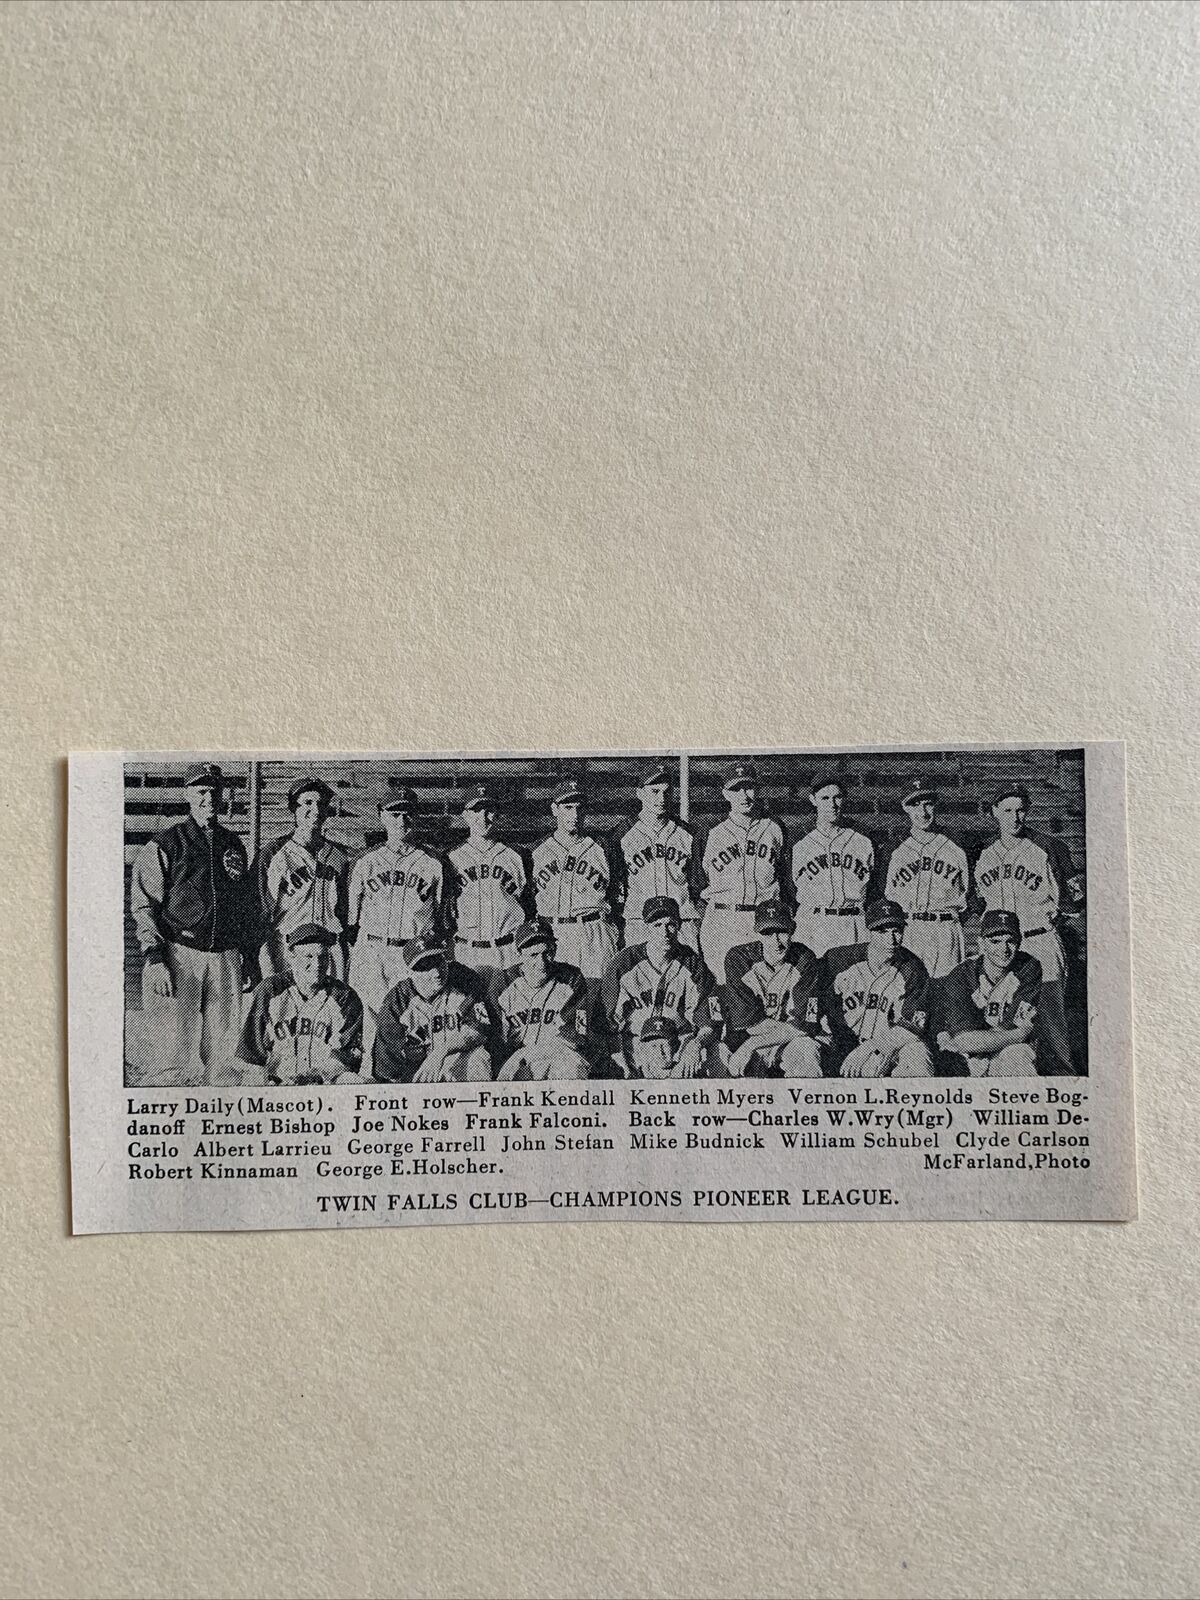 Twin Falls Cowboys Idaho Pioneer League Mike Budnick 1939 Baseball Team Picture